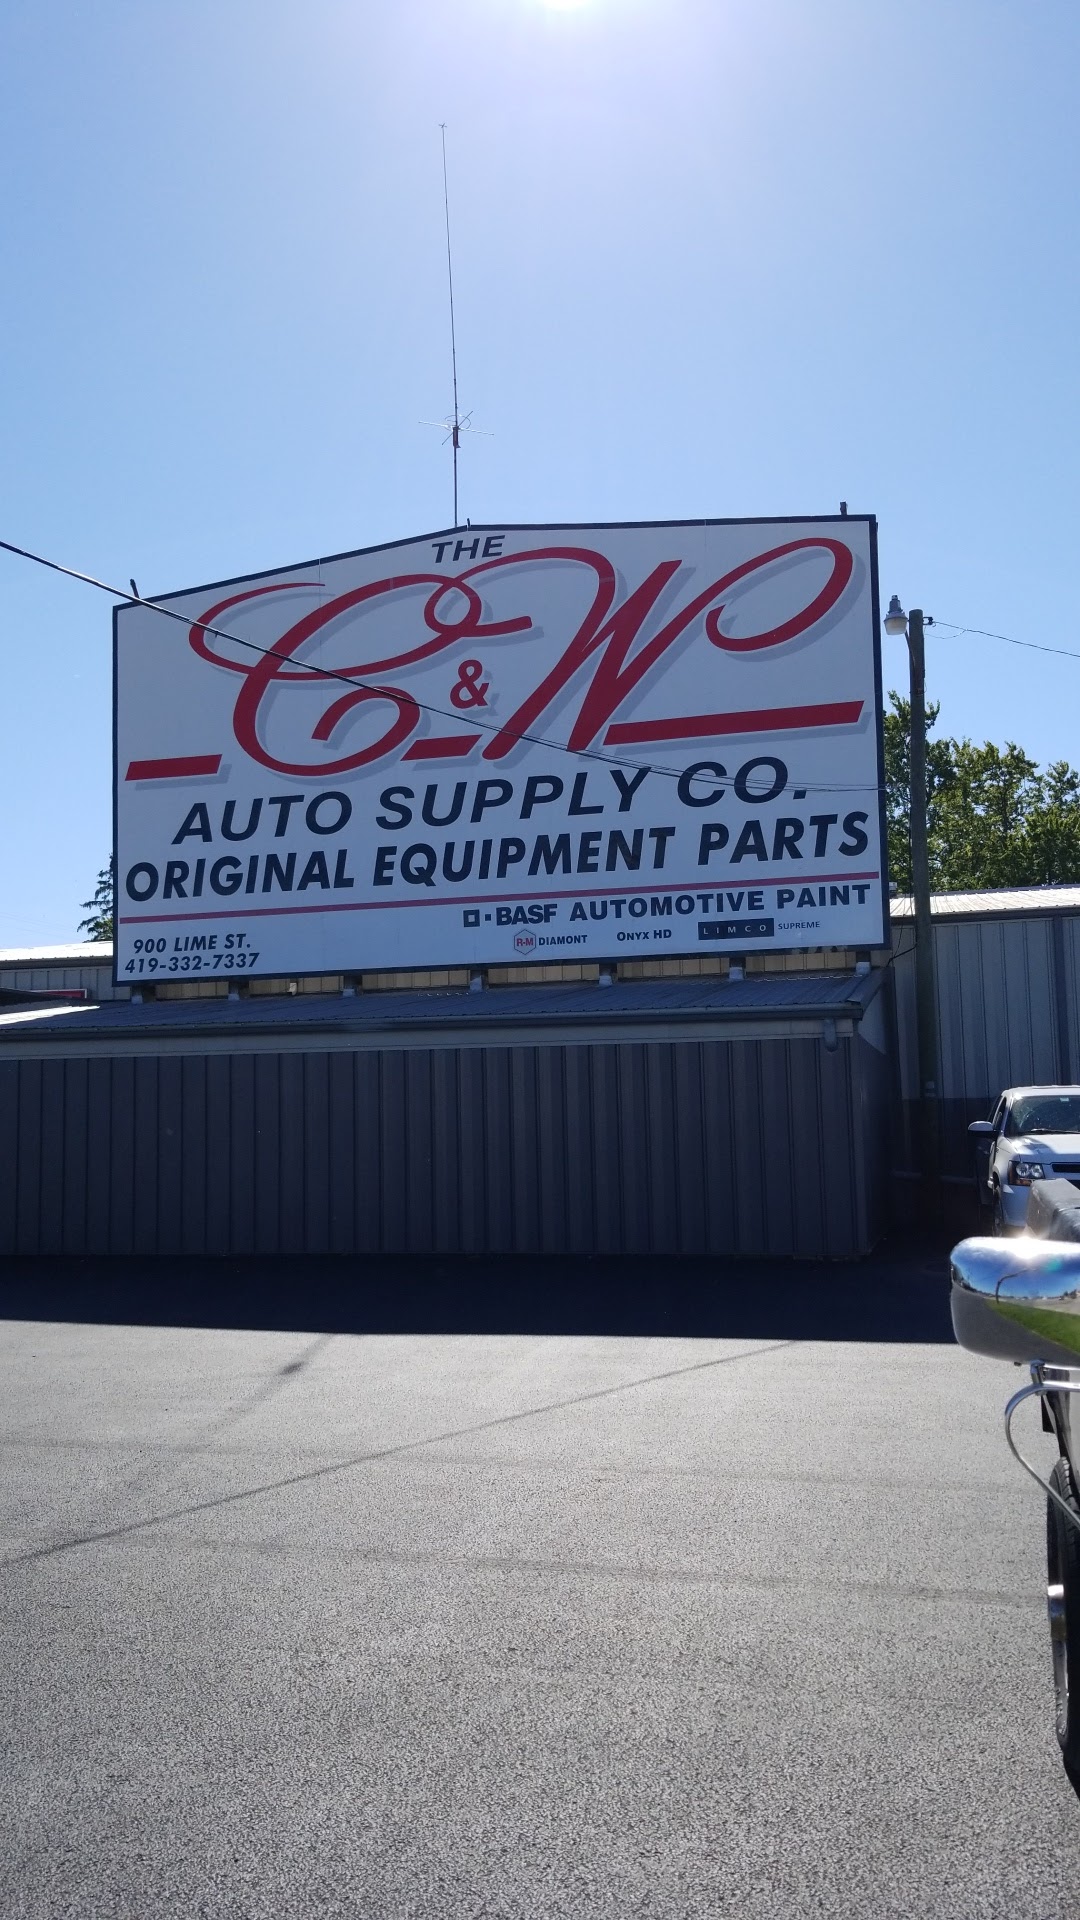 C & W Auto Supply Co.